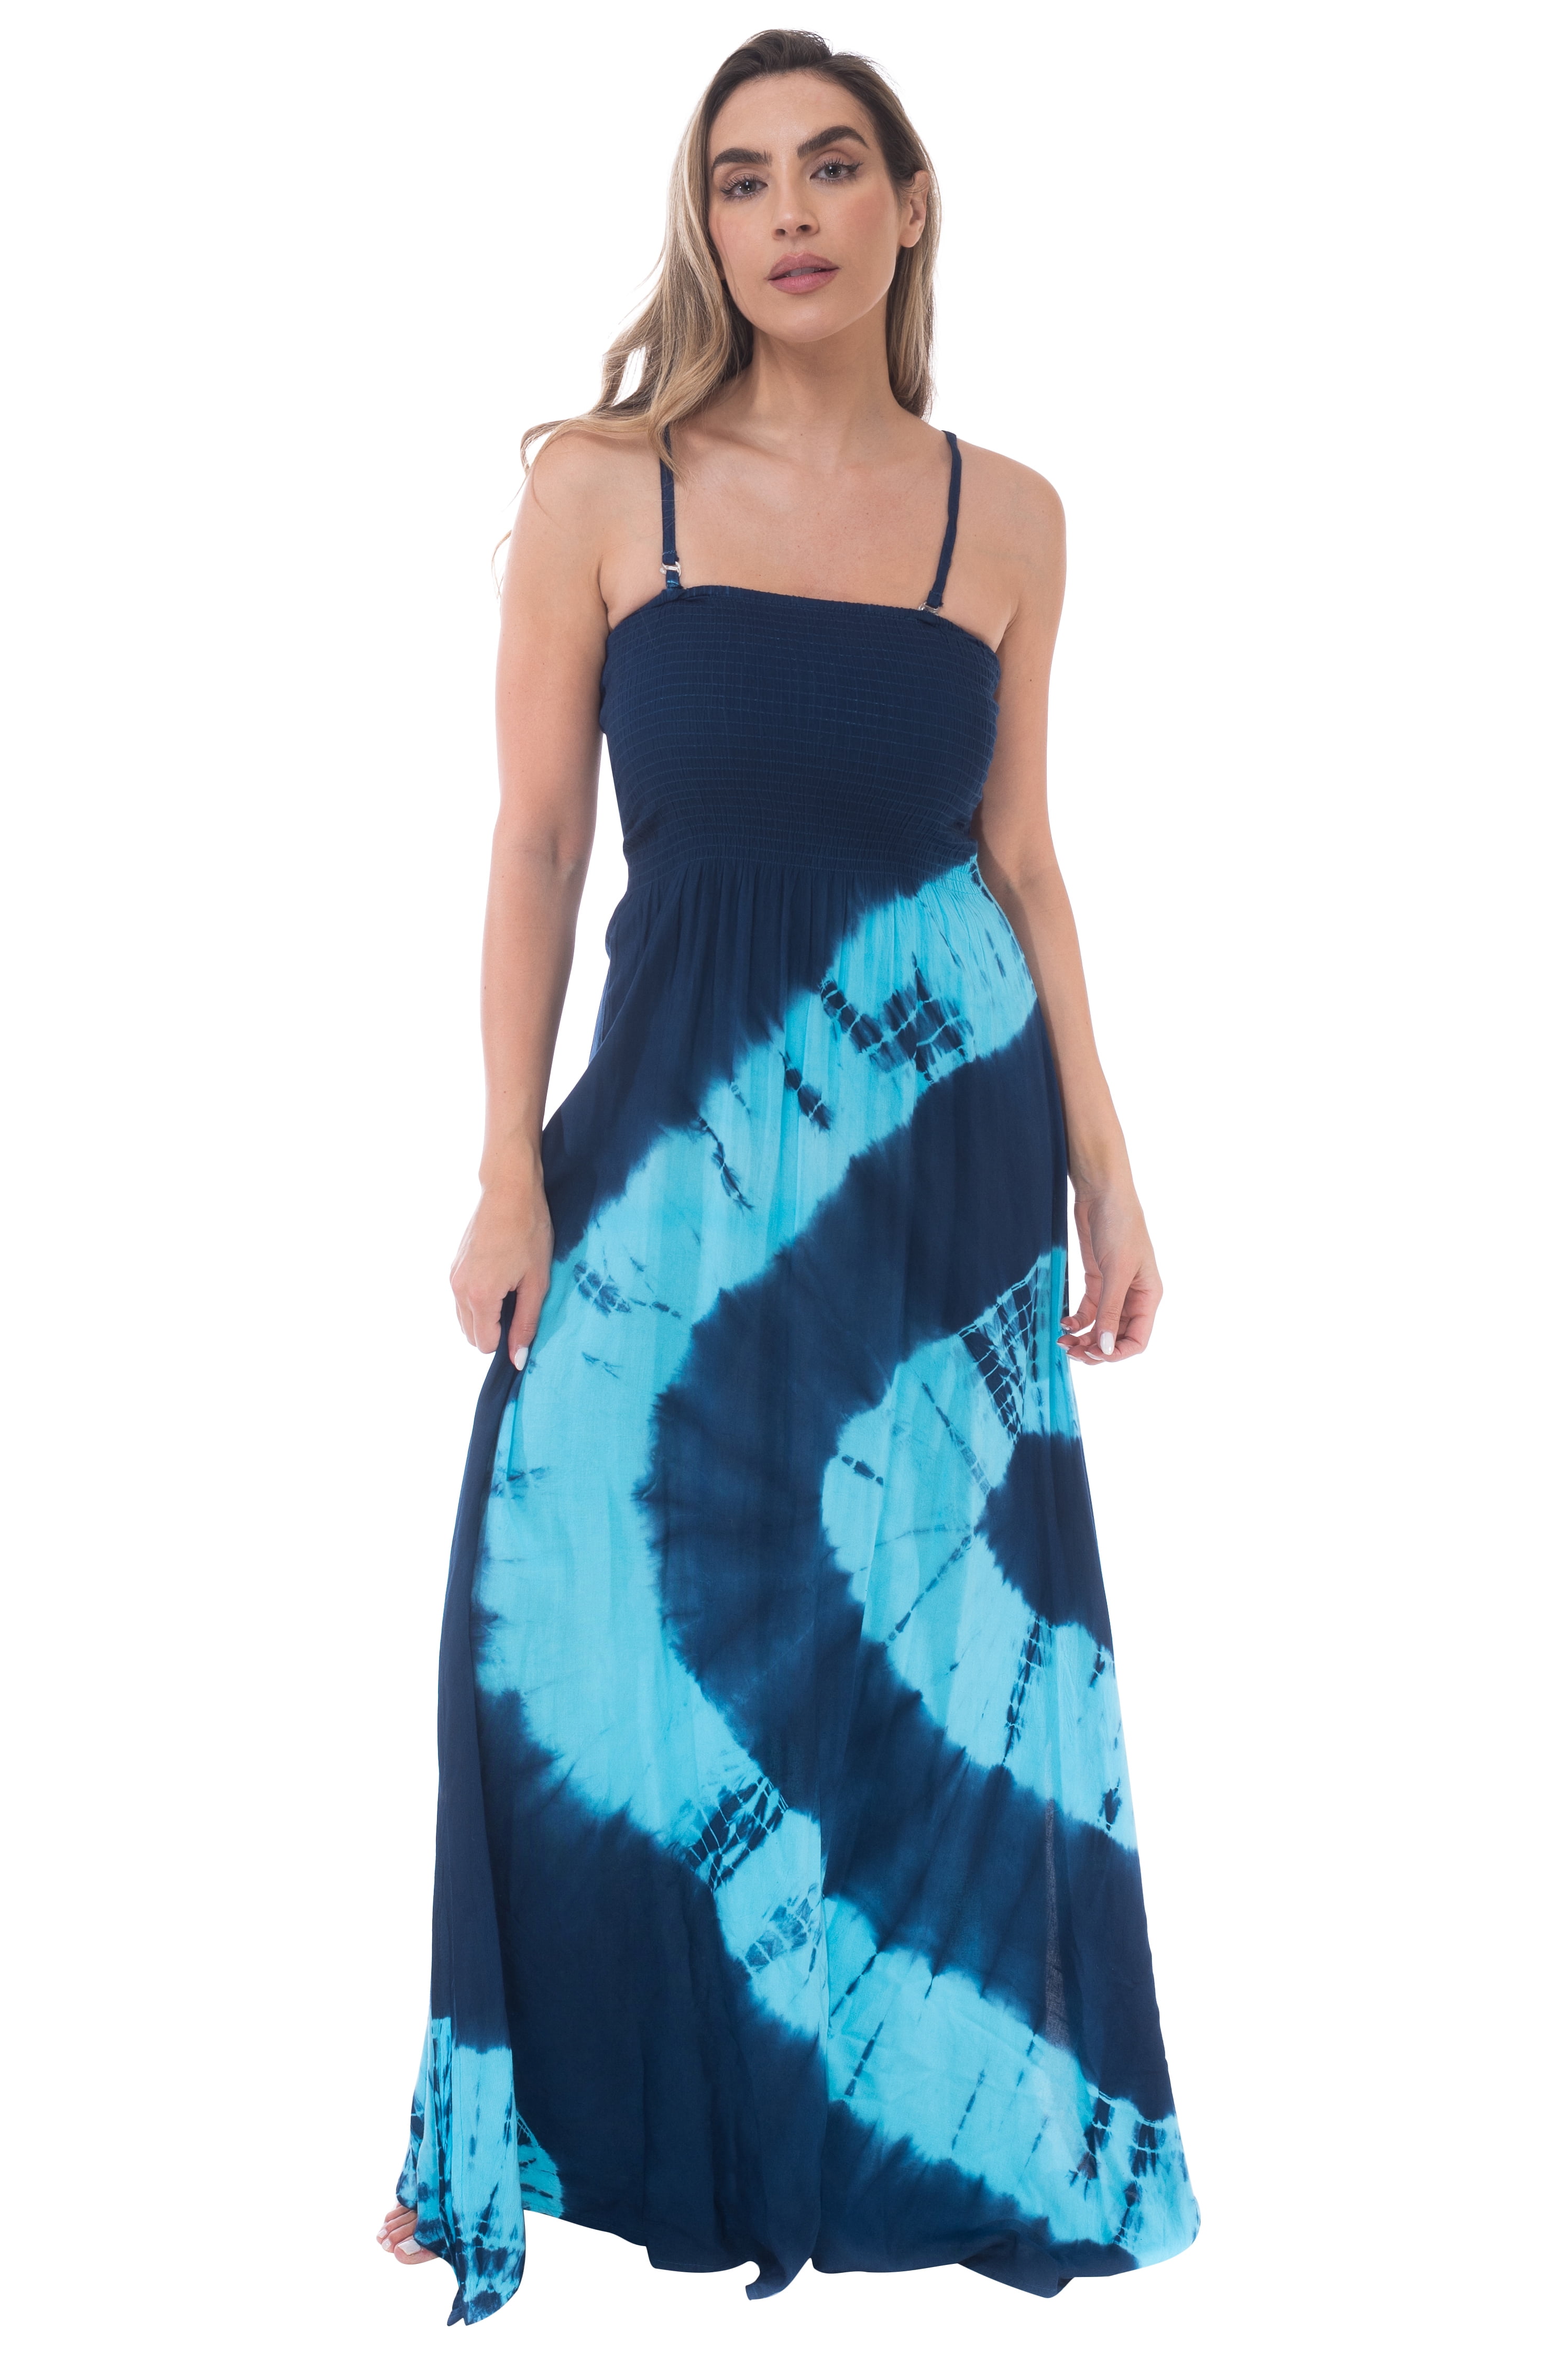 Riviera Sun Long Smocking Dresses for Women 21932-G-L - Walmart.com